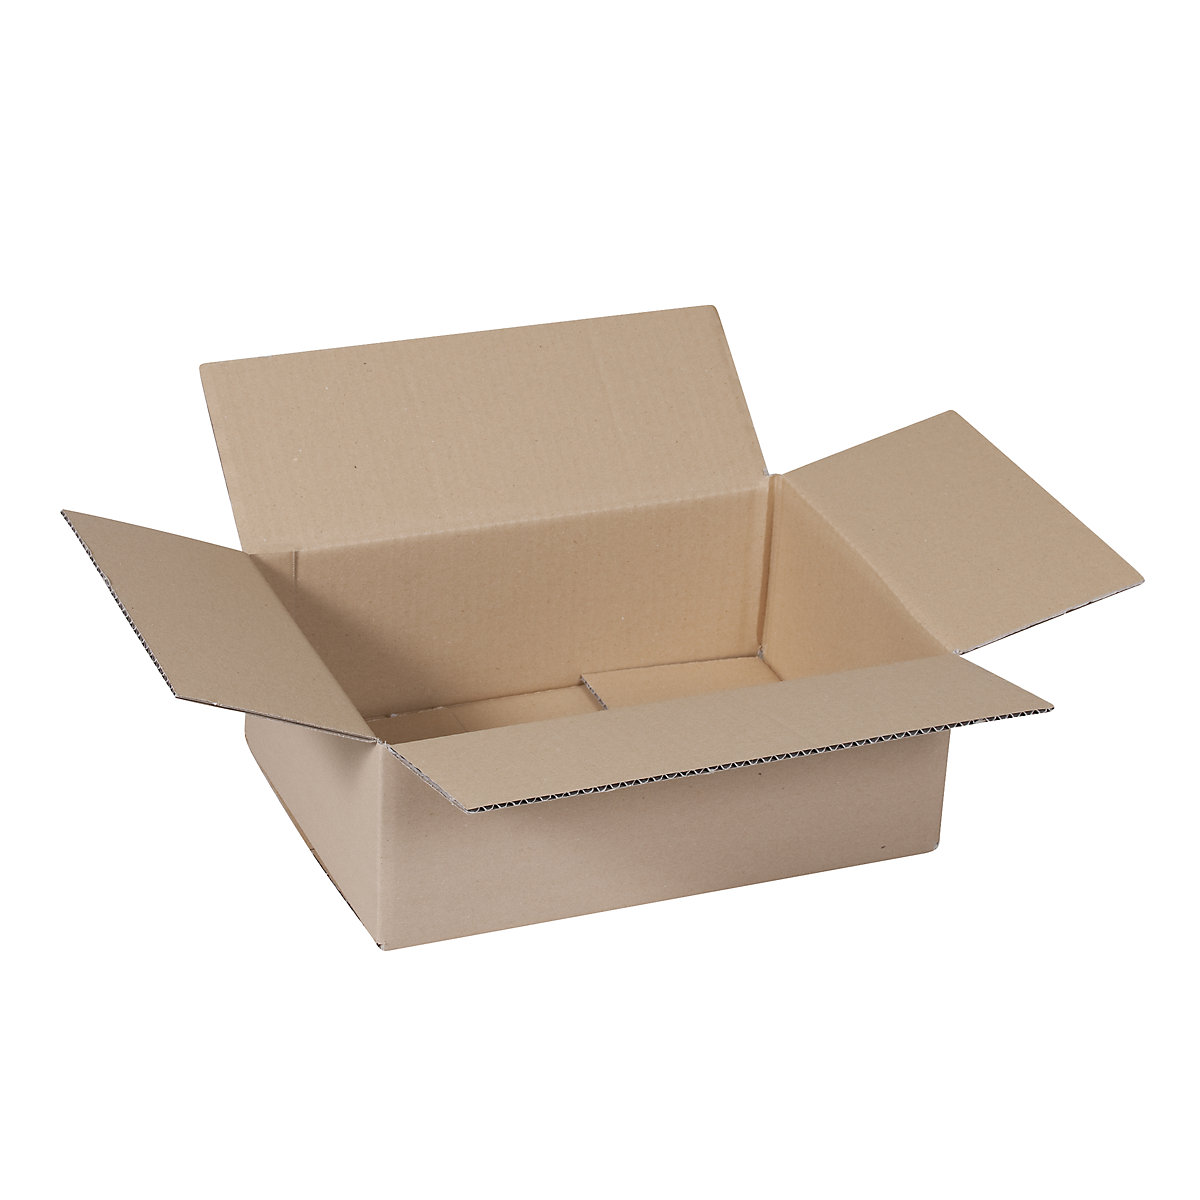 Folding cardboard box, FEFCO 0201, made of single fluted cardboard, internal dimensions 340 x 200 x 150 mm, pack of 50-19